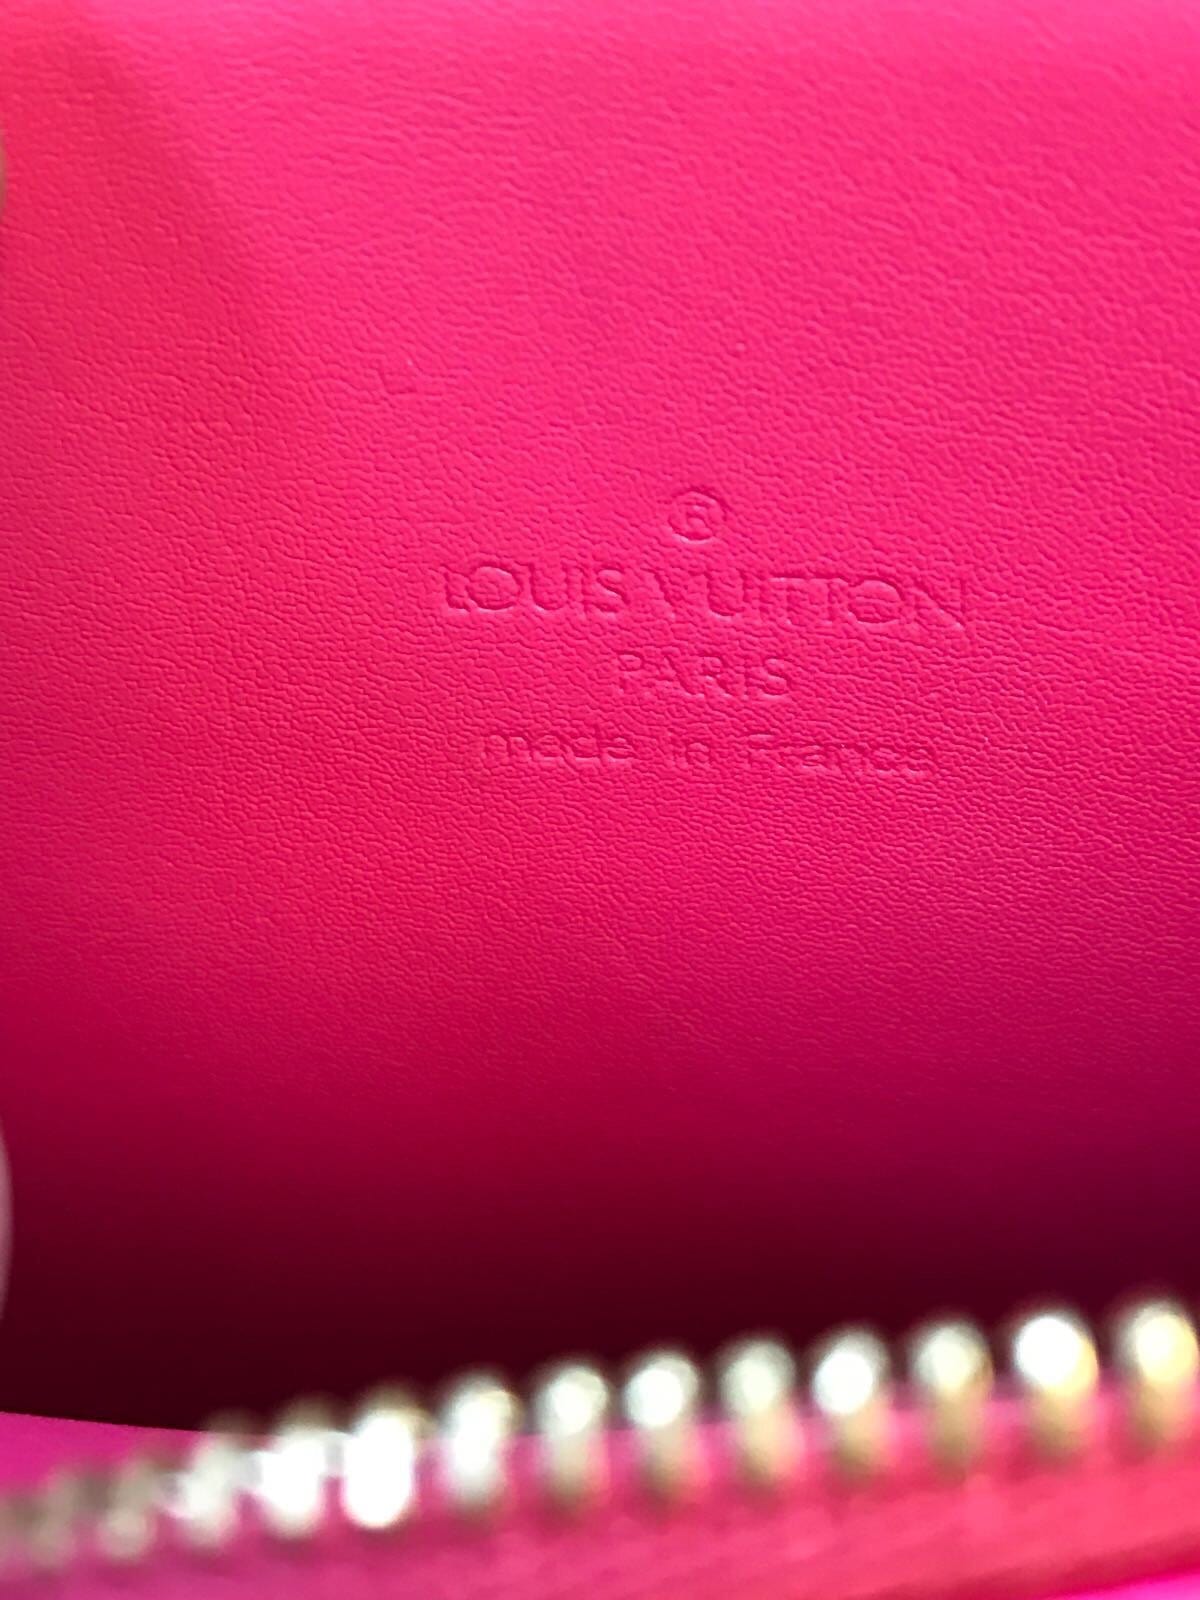 LOUIS VUITTON 🇯🇵 For Sale!!!! Get This Gorgeous and Elegant LV Verni